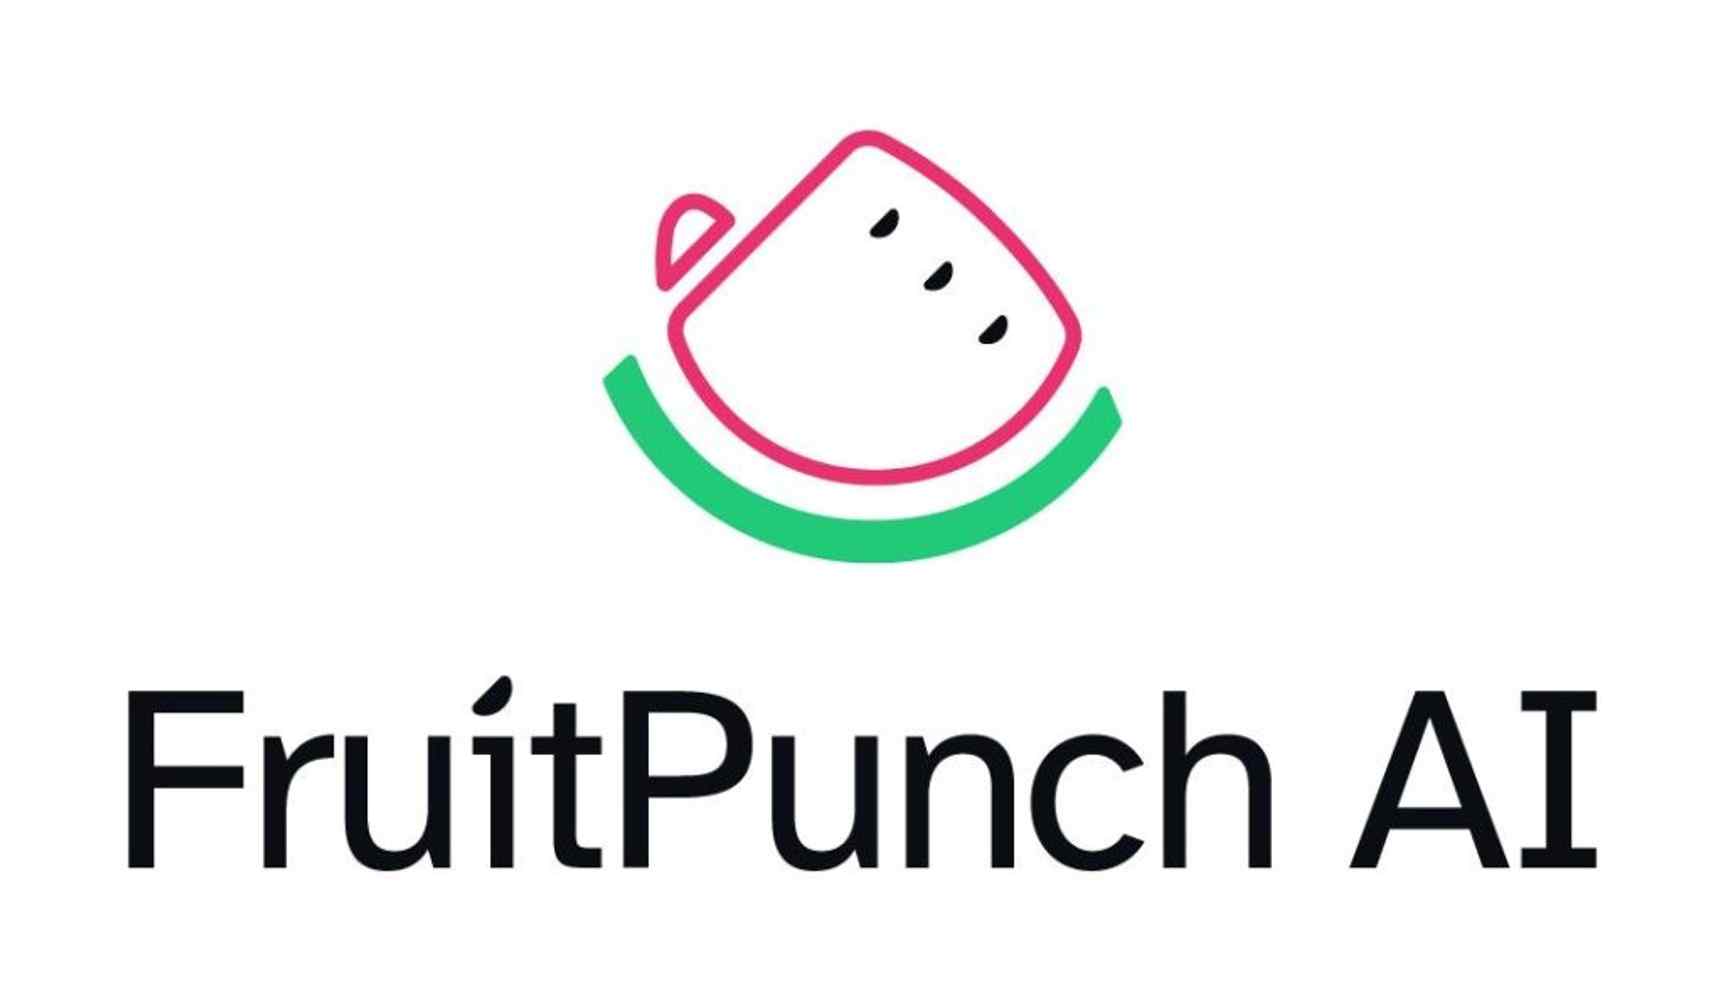 FruitPunch AI